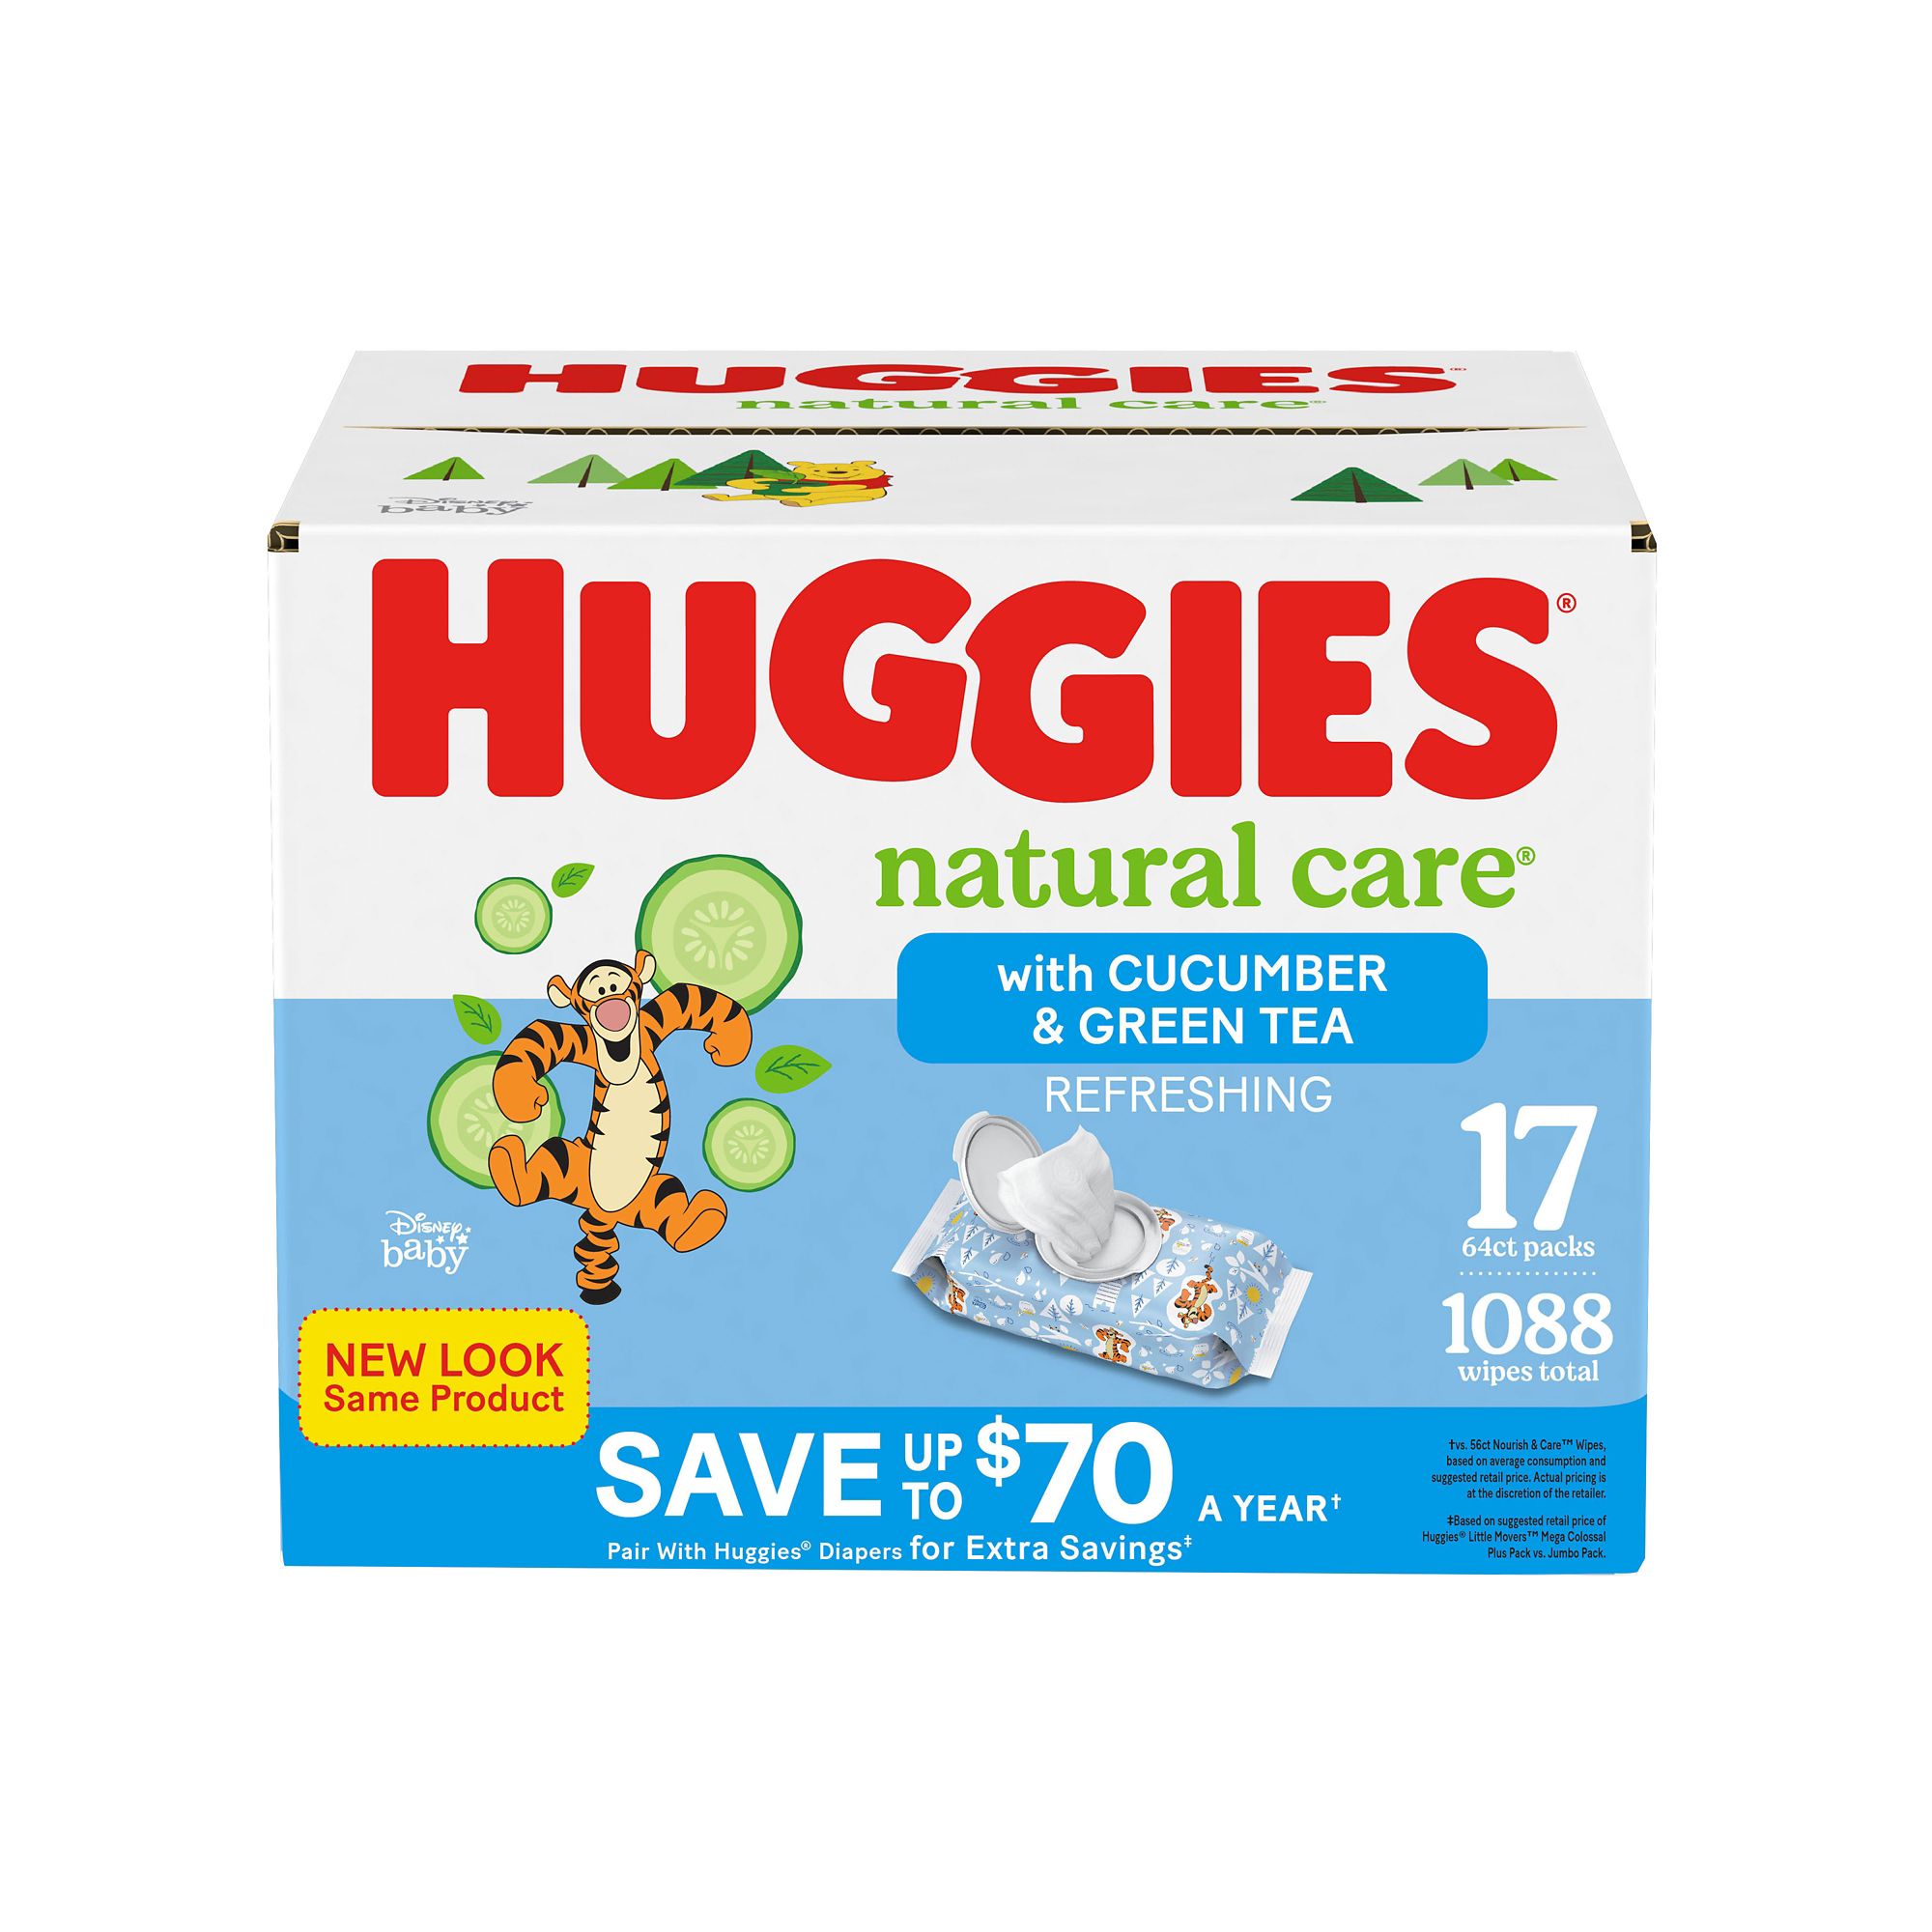 Huggies Cucumber and Green Tea Natural Care Sensitive Baby Wipes, 1088 ct.